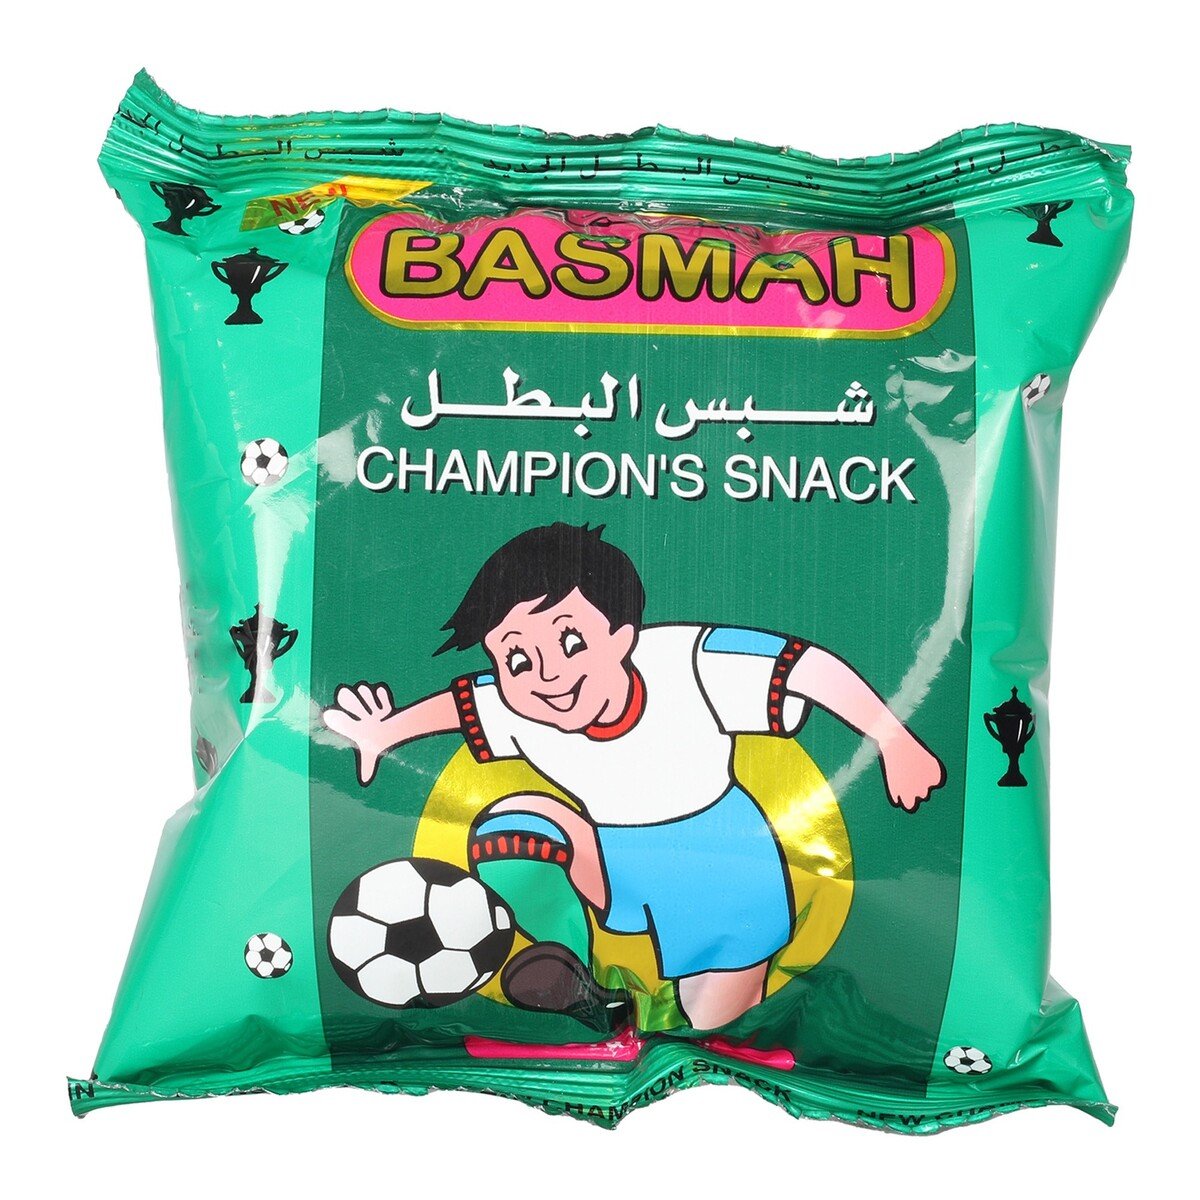 Basmah Salt & Vinegar Champions Snack  24 x 12g